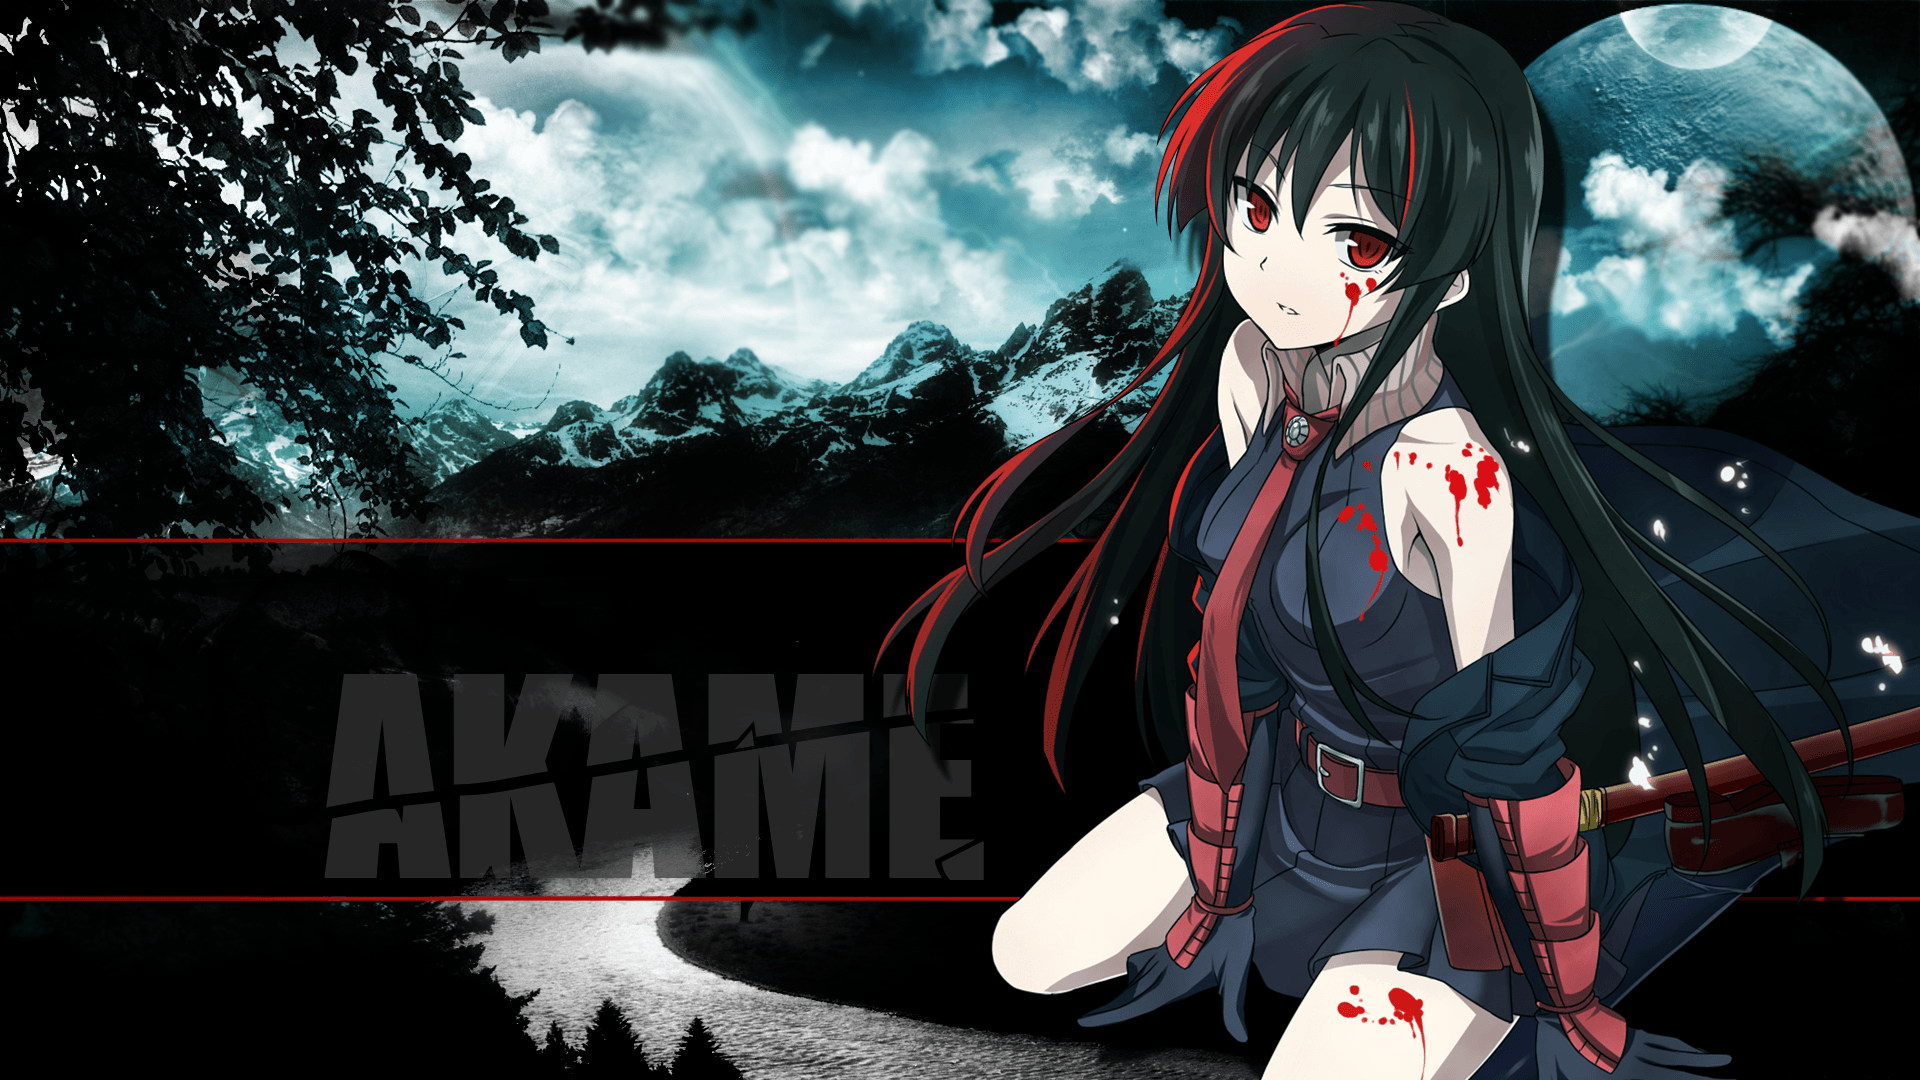 Akame Ga Kill HD Wallpaper and Background Image